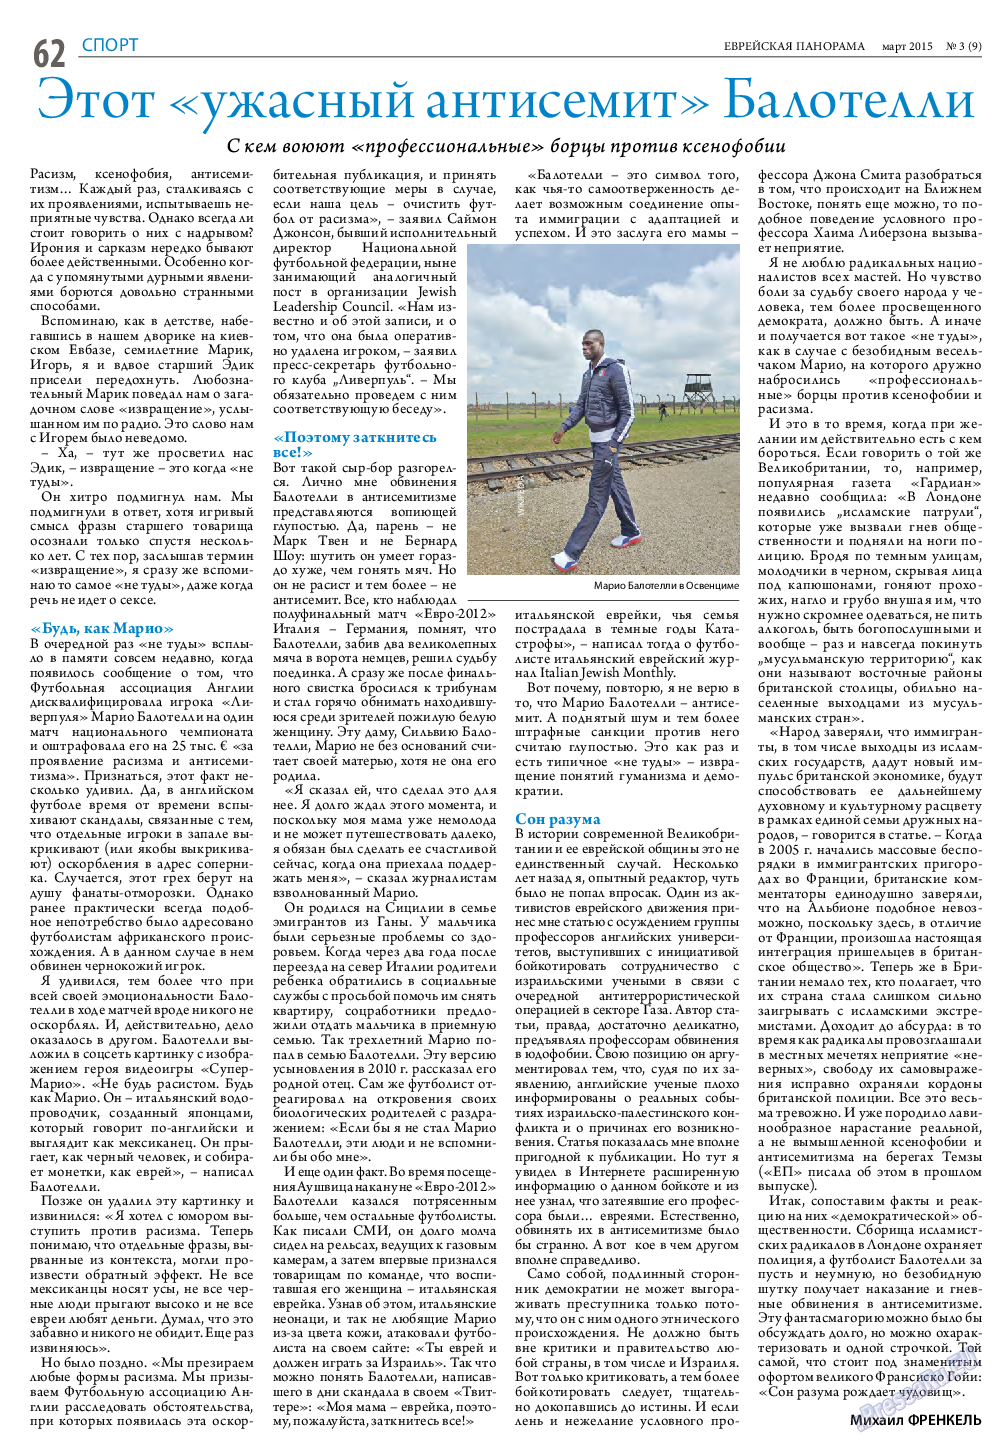 Еврейская панорама, газета. 2015 №3 стр.62